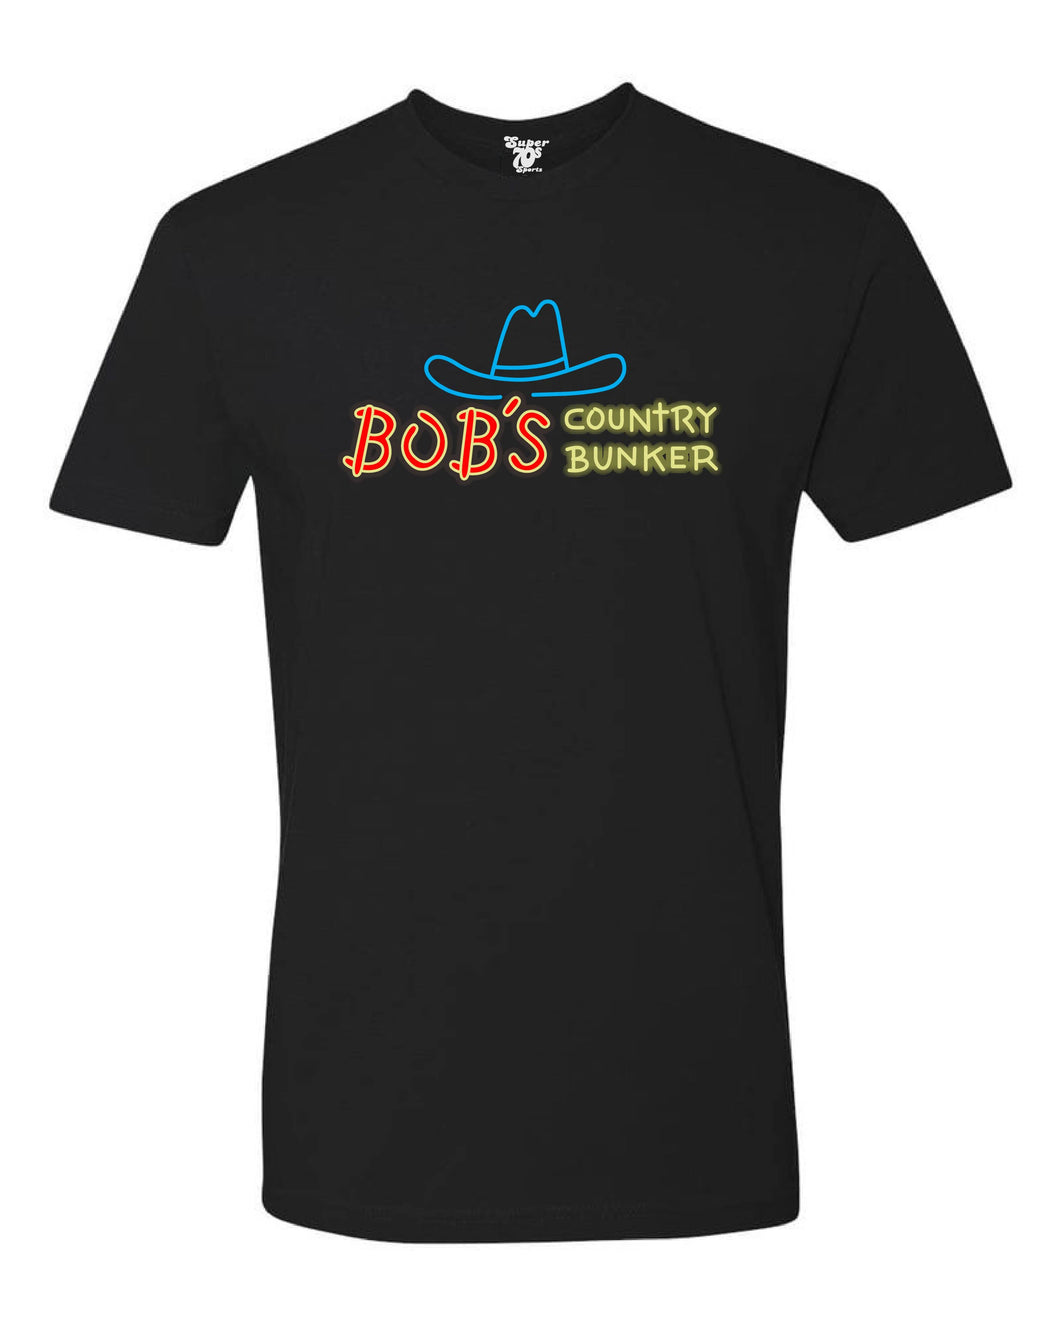 Bob's Country Bunker Tee